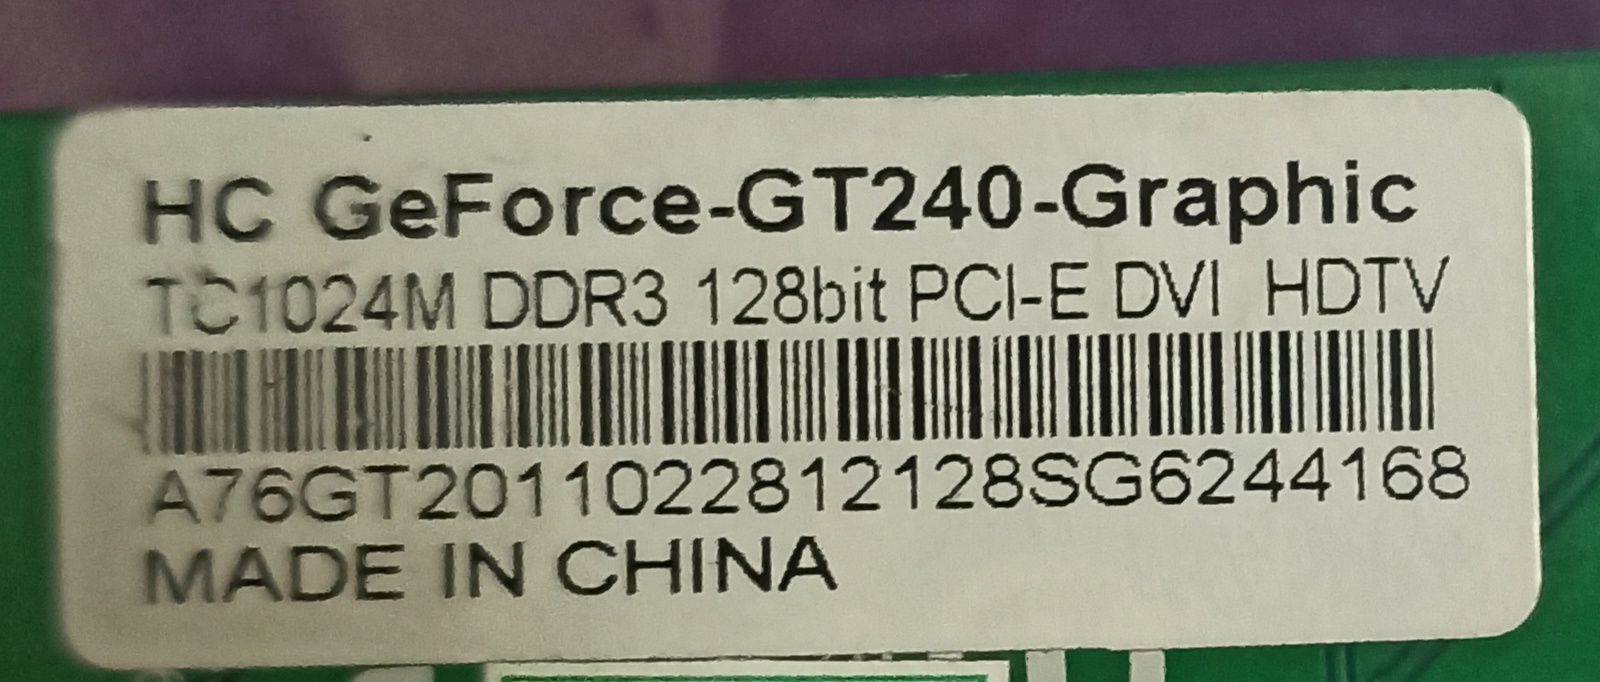 Видеокарта GeForce GT 240 1gb 128 bit DDR3

CPU - Intel Pentium E2220